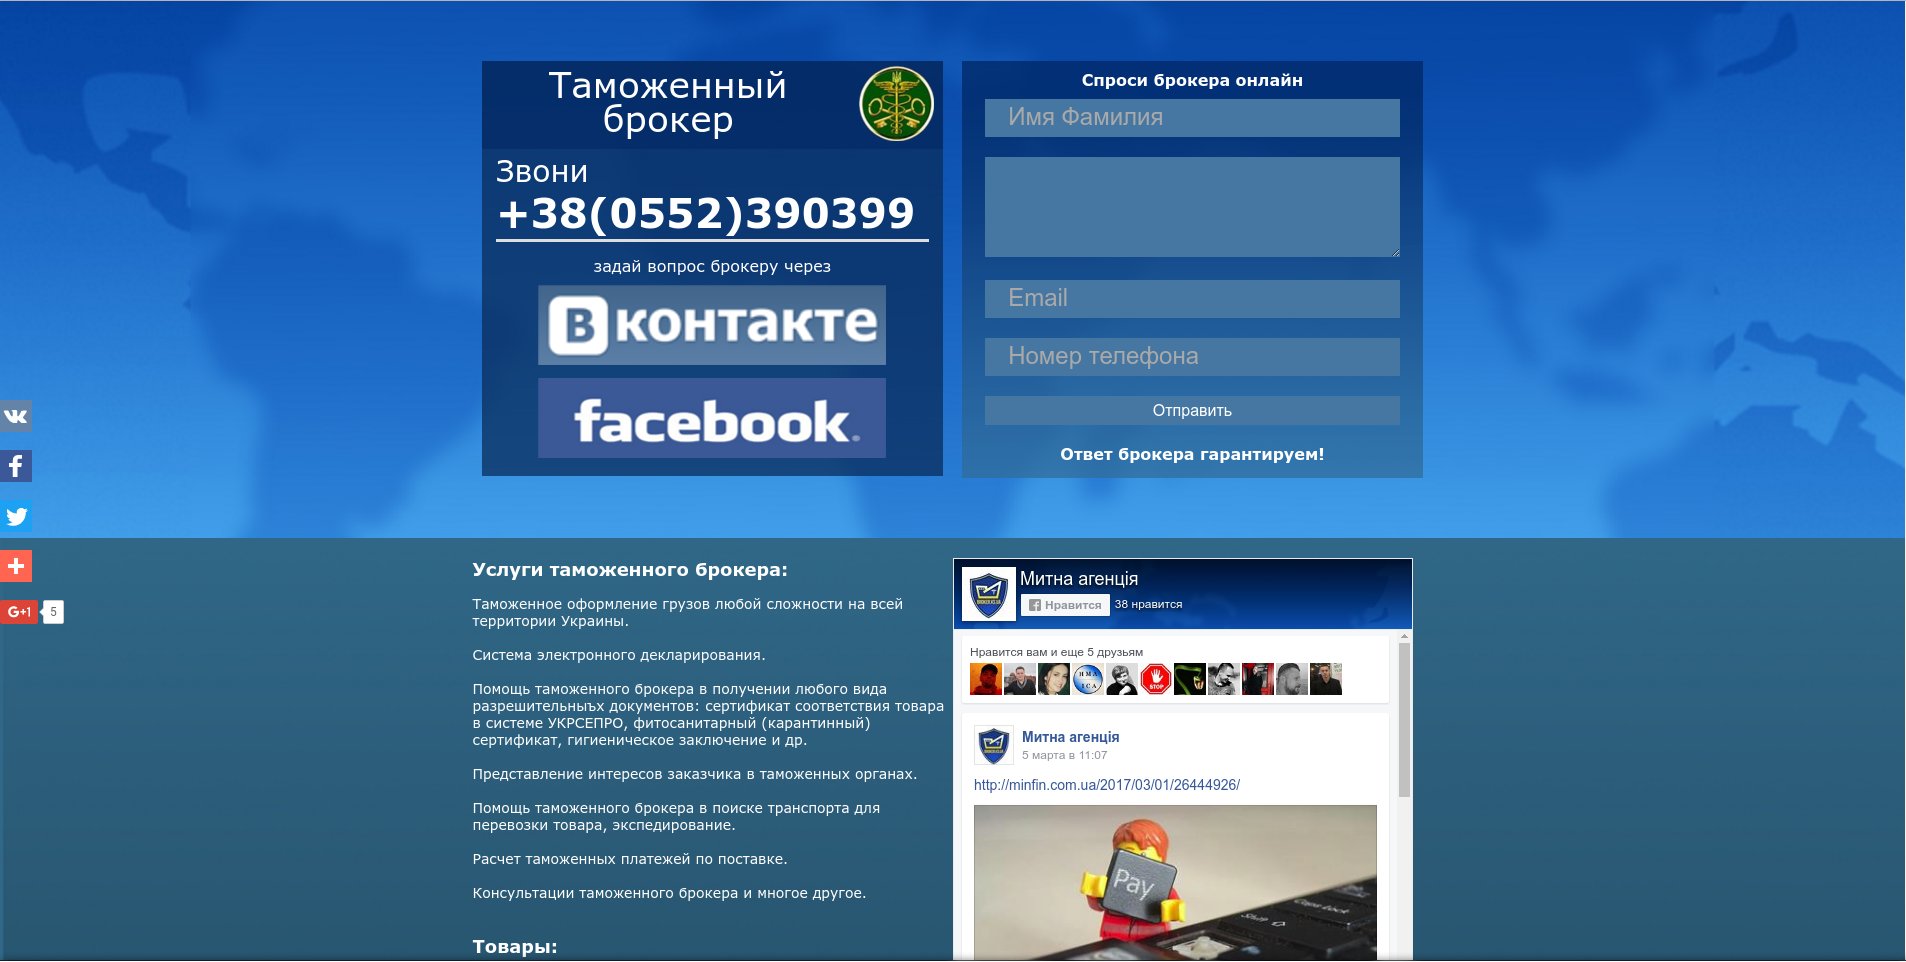 Landing promo page of a customs broker. Kherson